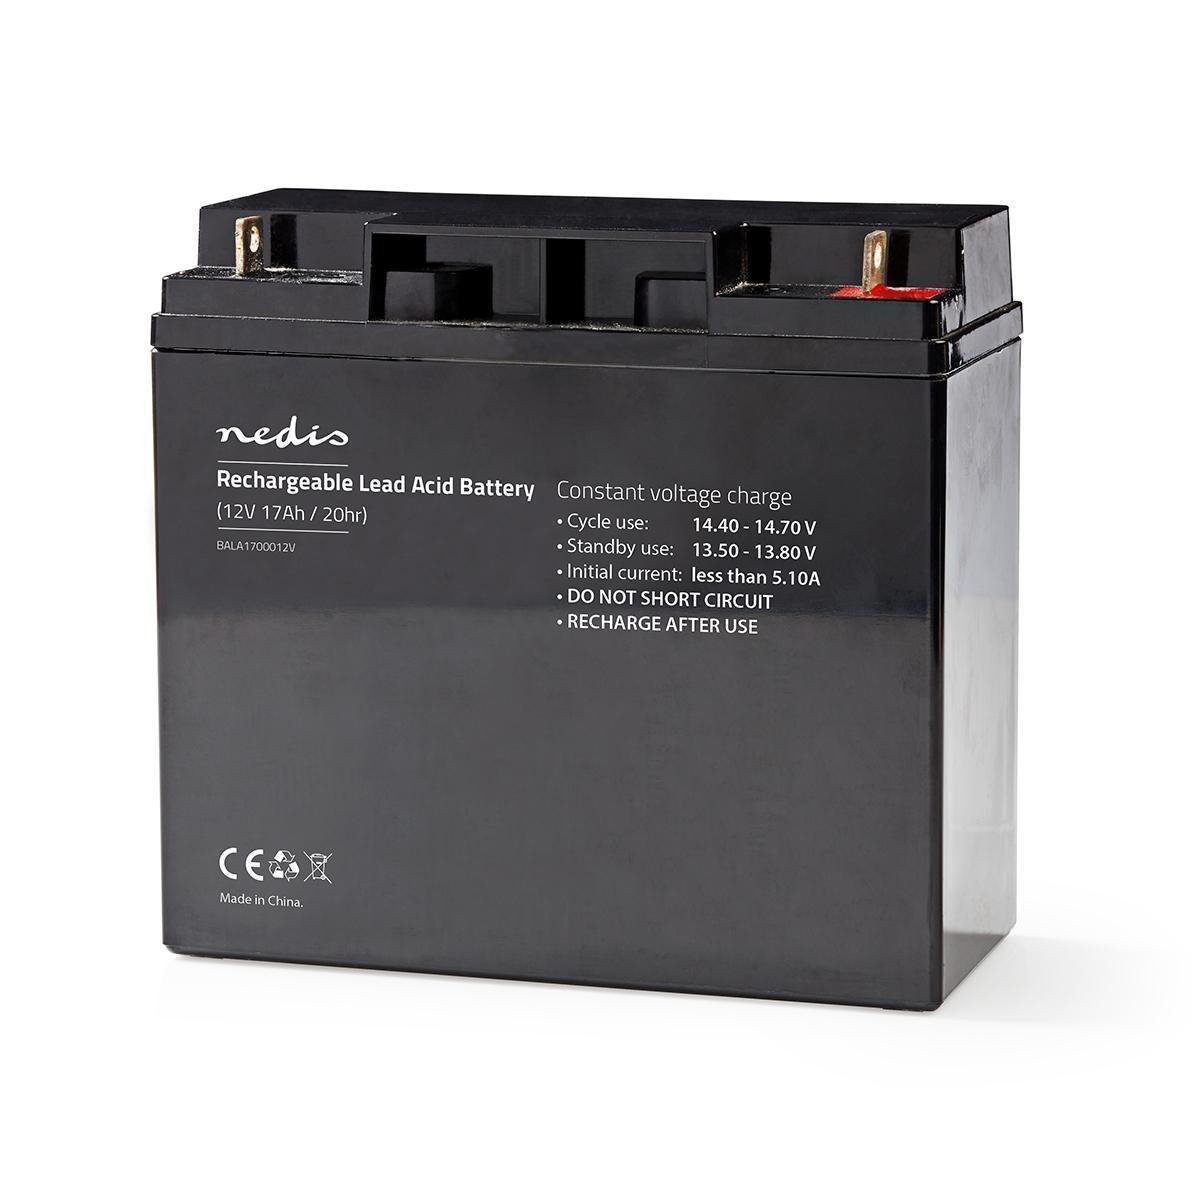 Rechargeable Lead-Acid Battery 12V 17000 mAh 181 x 167 x 77 mm